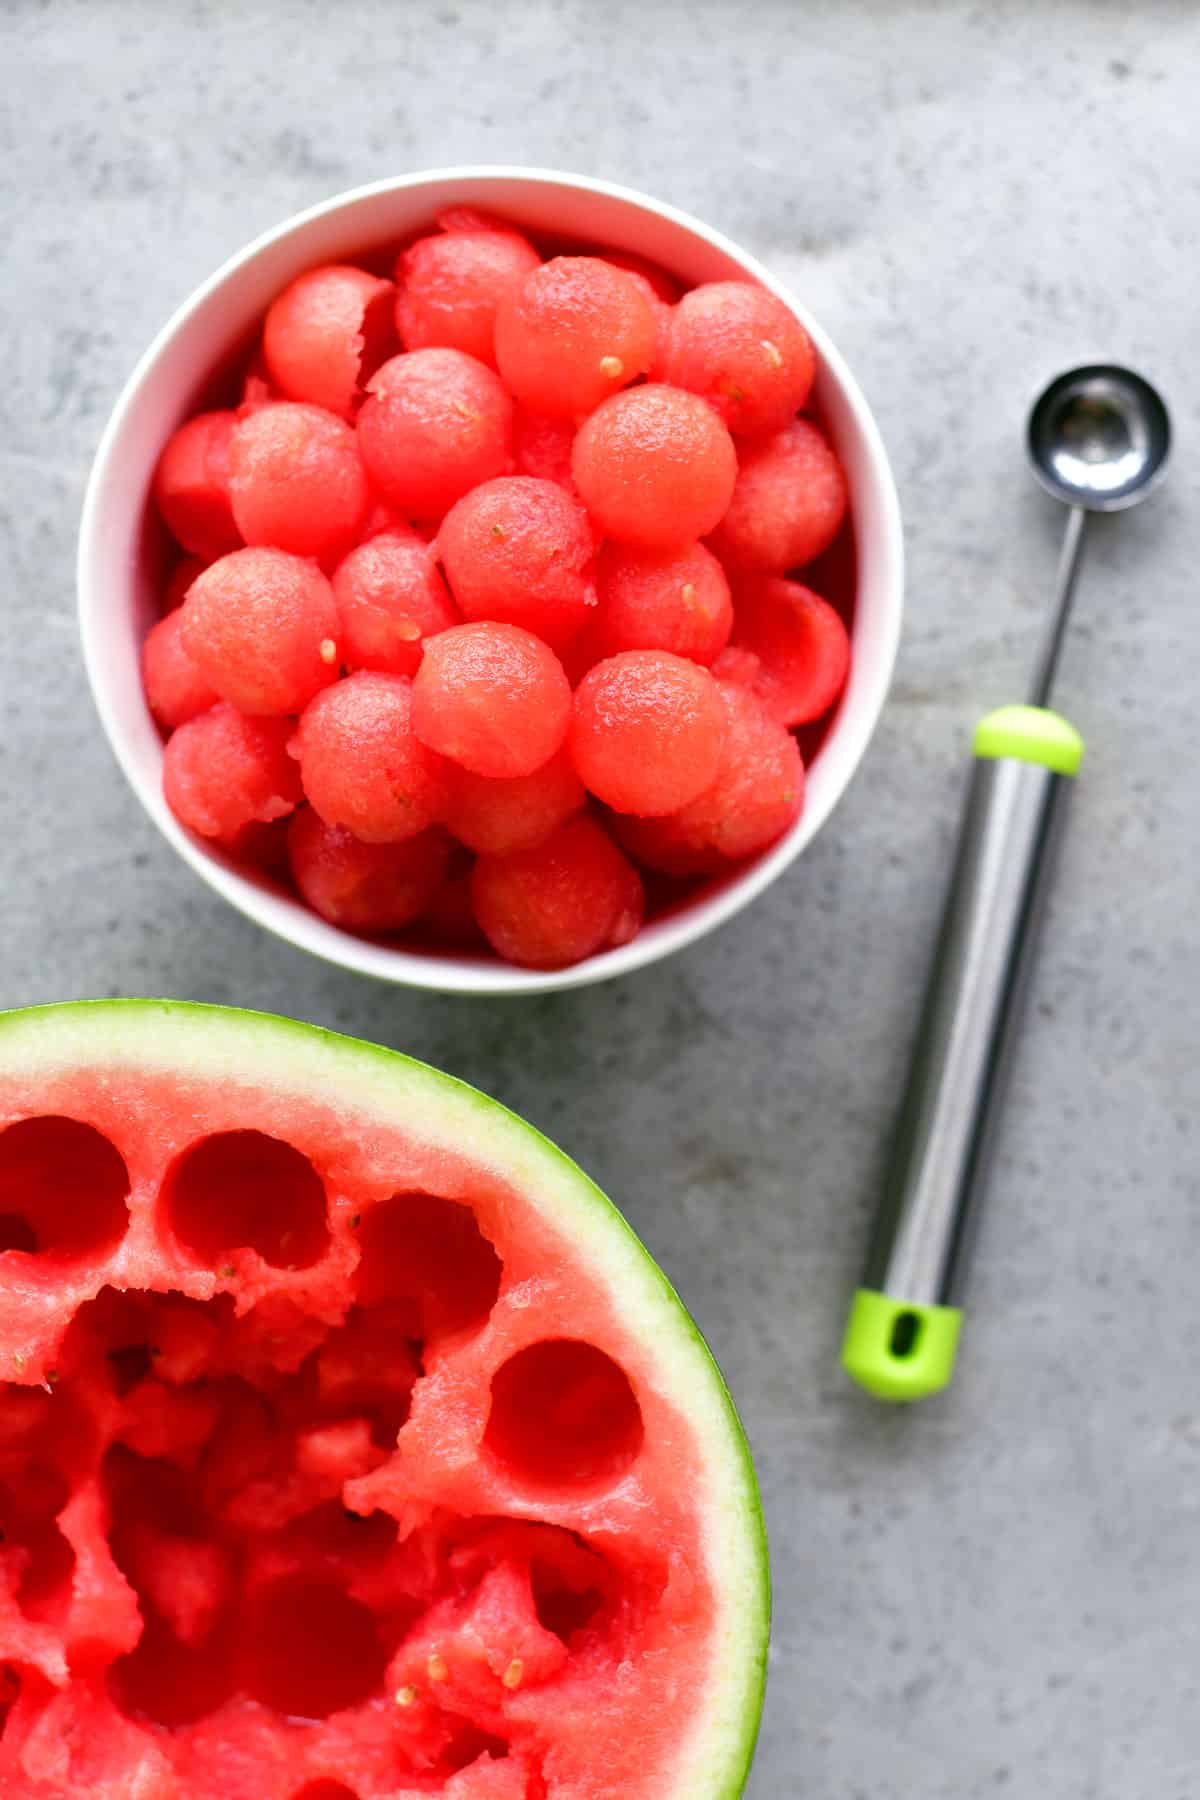 watermelon balls in a white bowl next to a melon baller